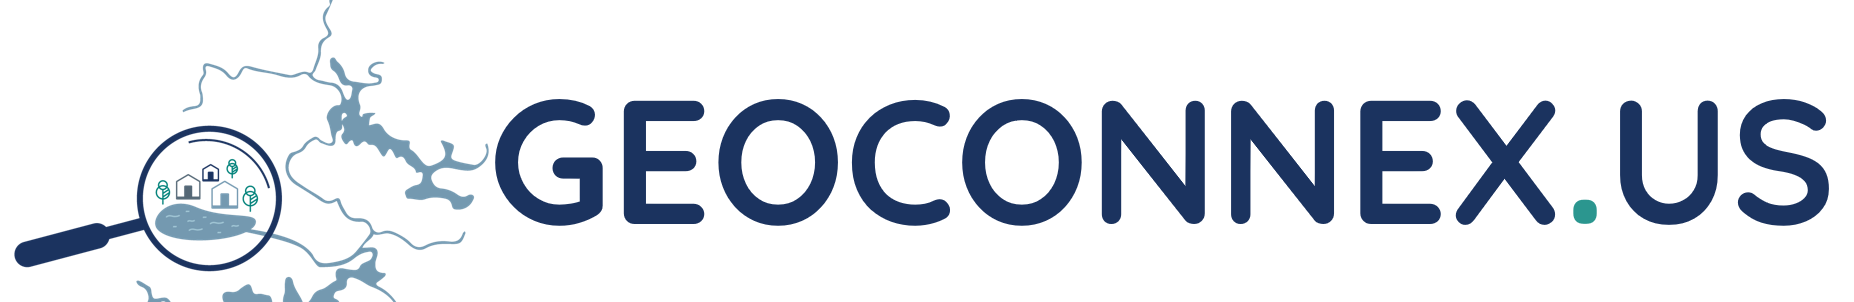 Geoconnex Logo